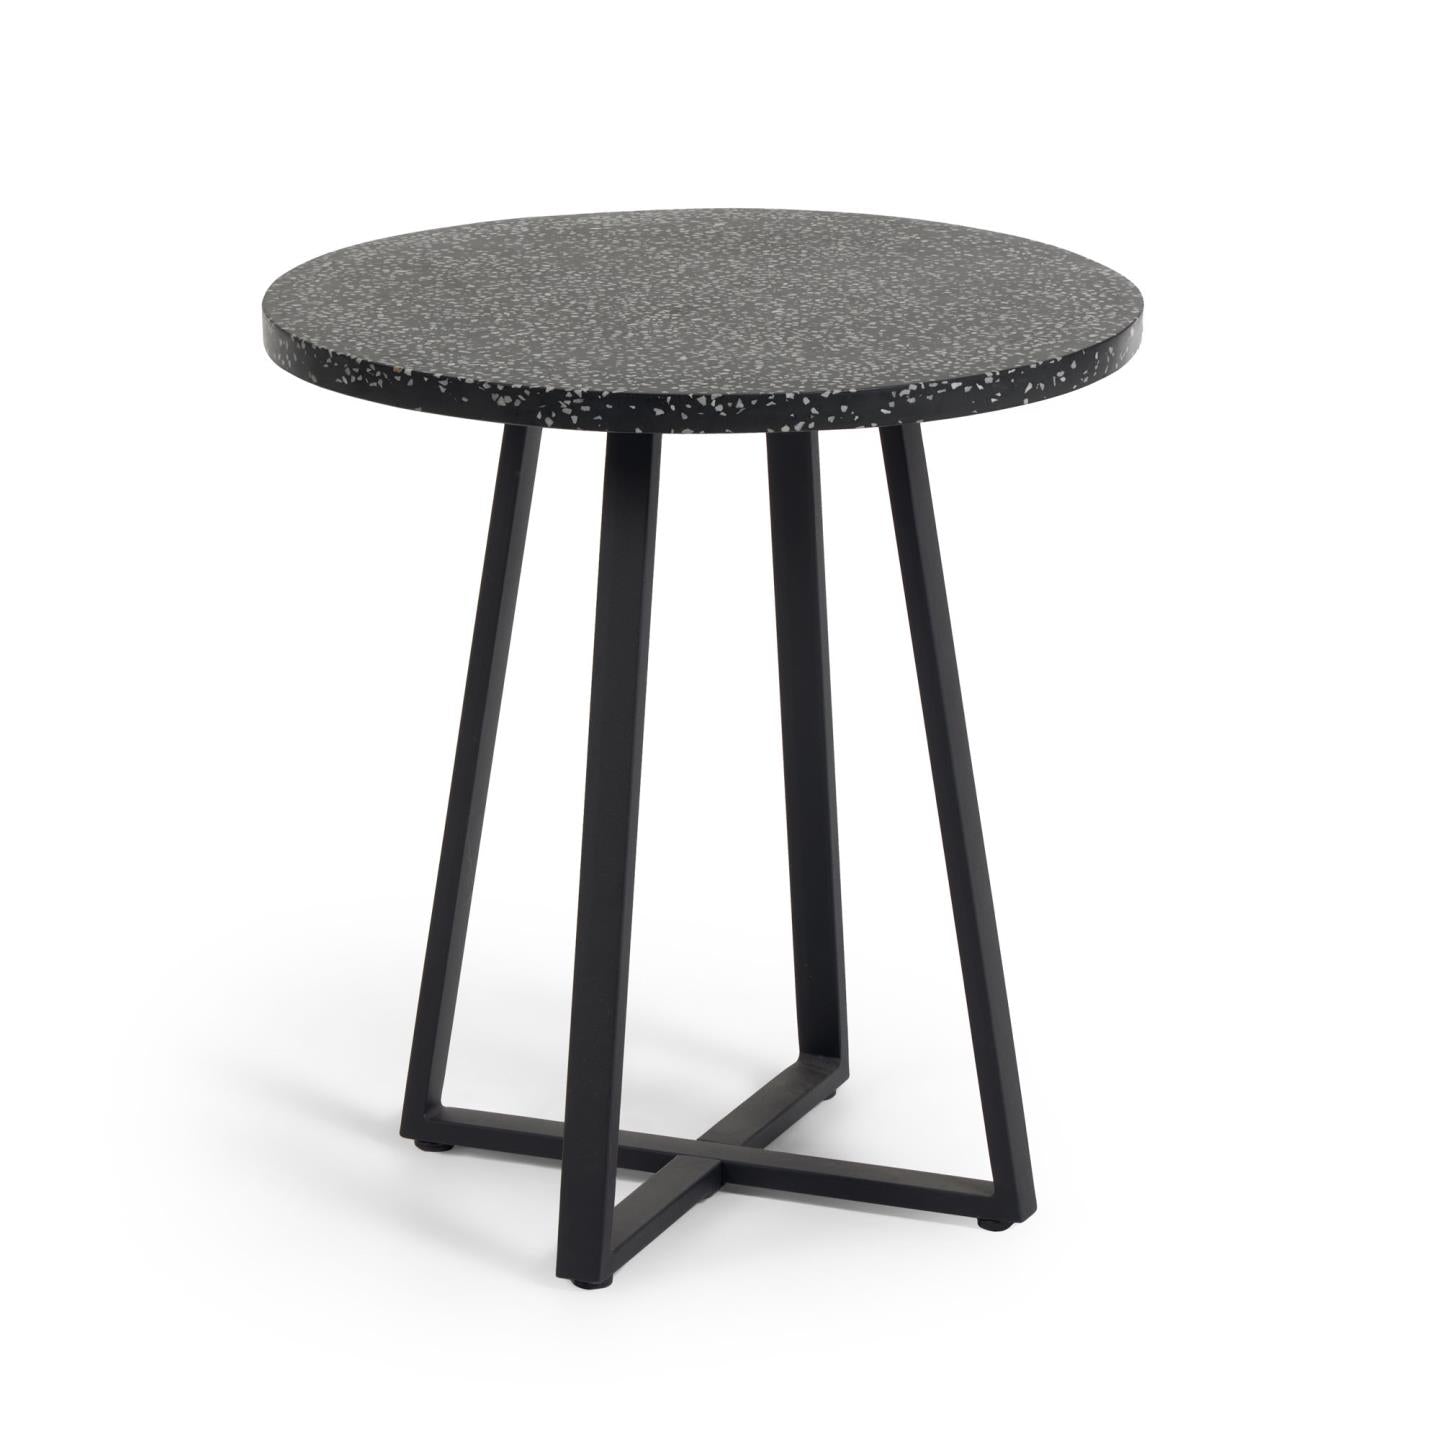 Tella round terrazzo table in black with steel legs, Ø 70 cm